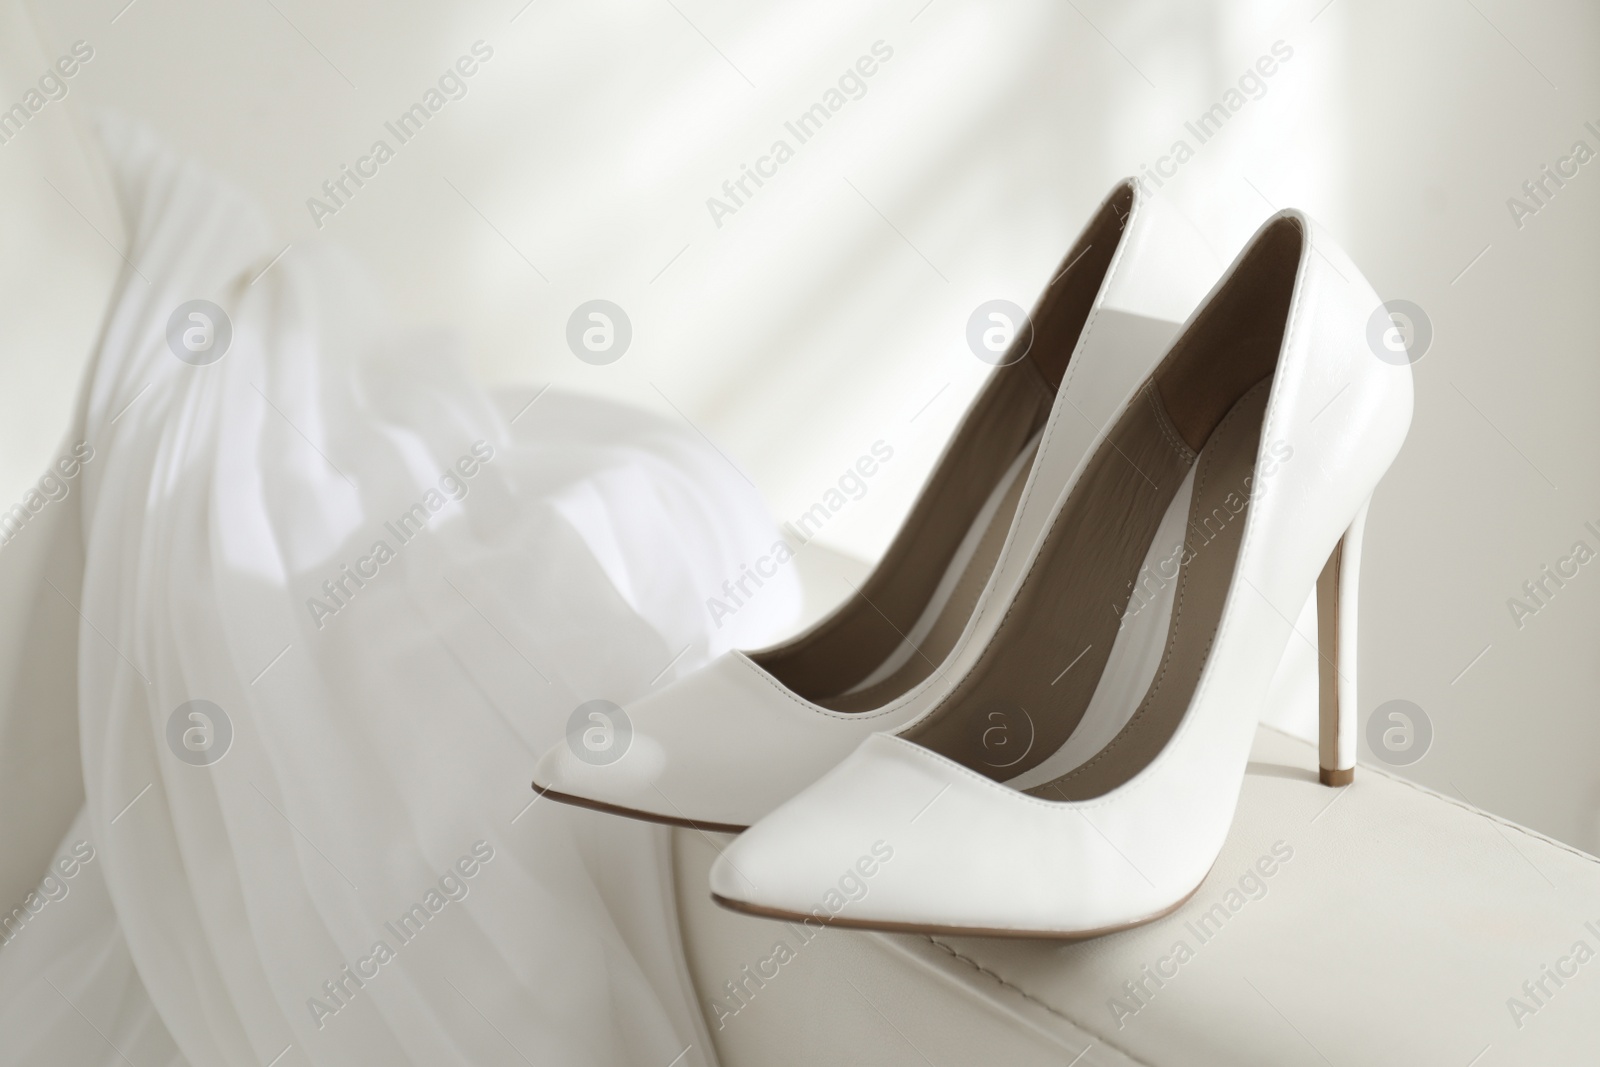 Photo of Classic white wedding shoes on sofa indoors